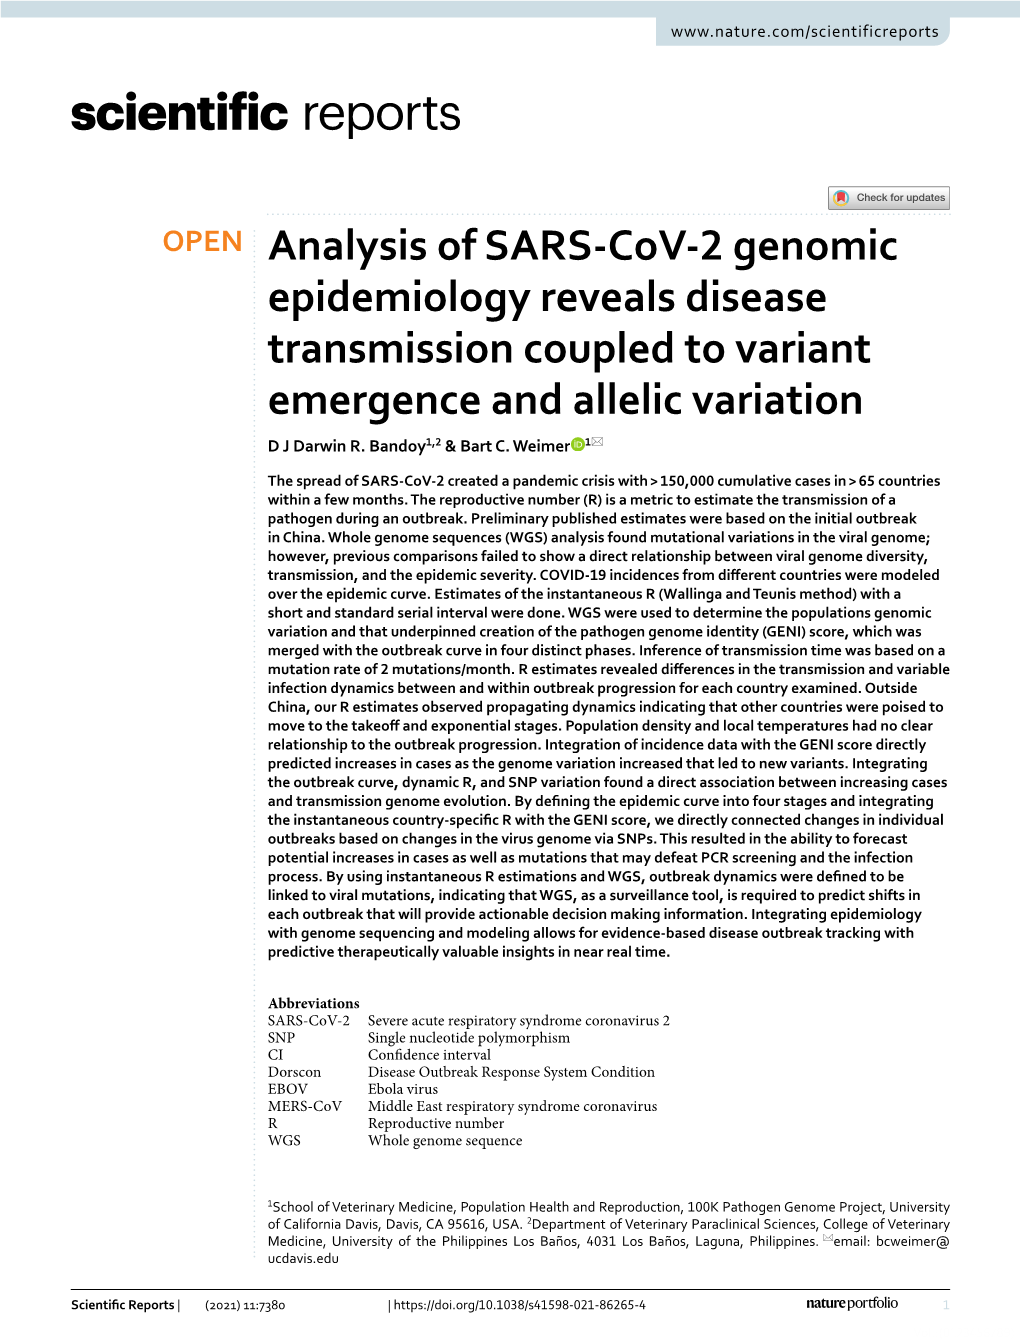 Analysis of SARS-Cov-2 Genomic Epidemiology Reveals Disease